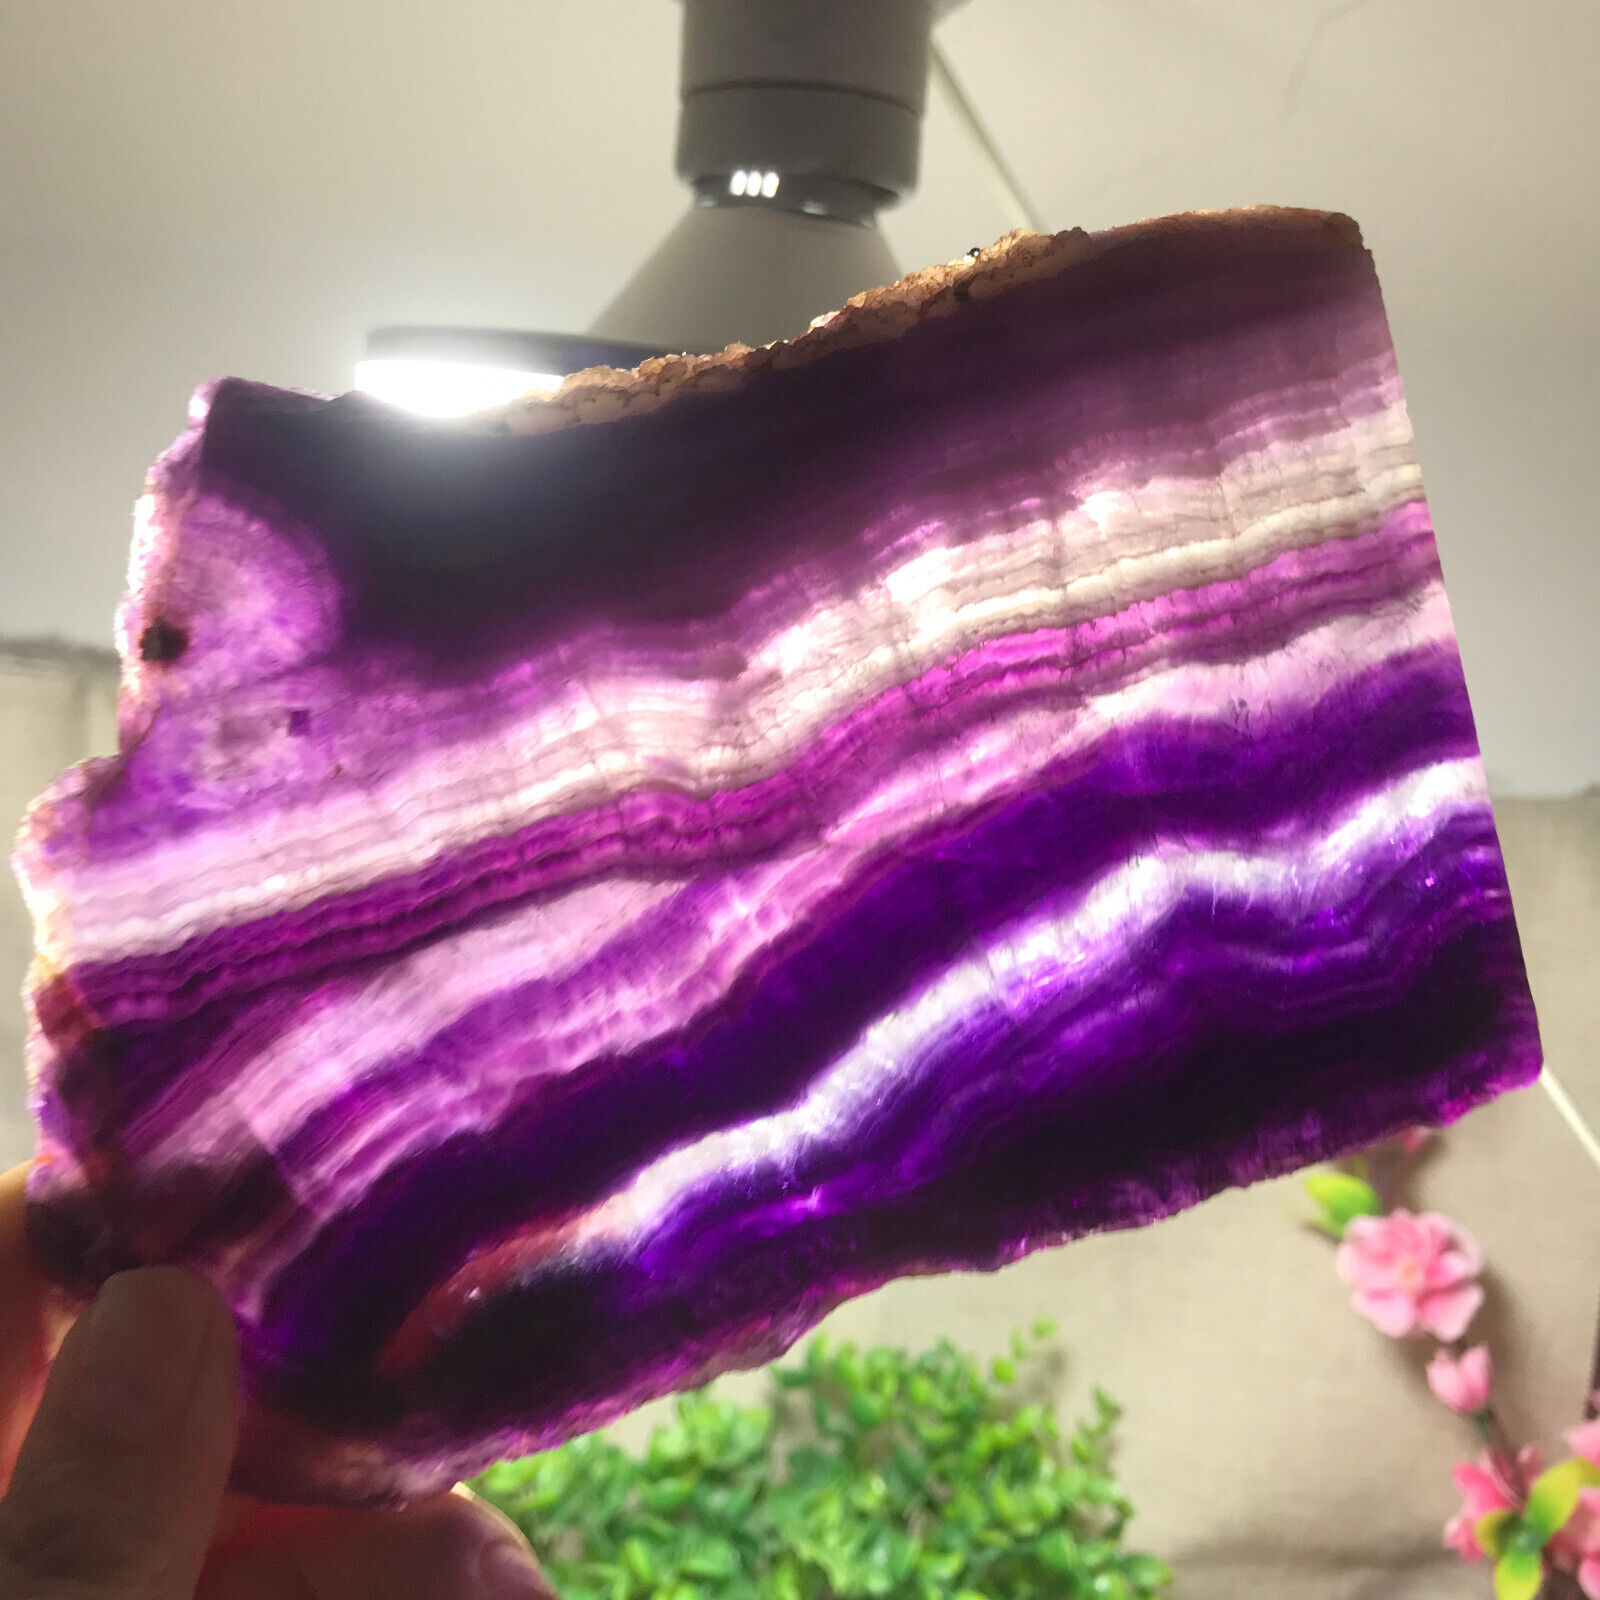 425g Stunning-Natural-Colorful-Slice-Fluorite-Crystal-Stone-purple-Fluorite 02